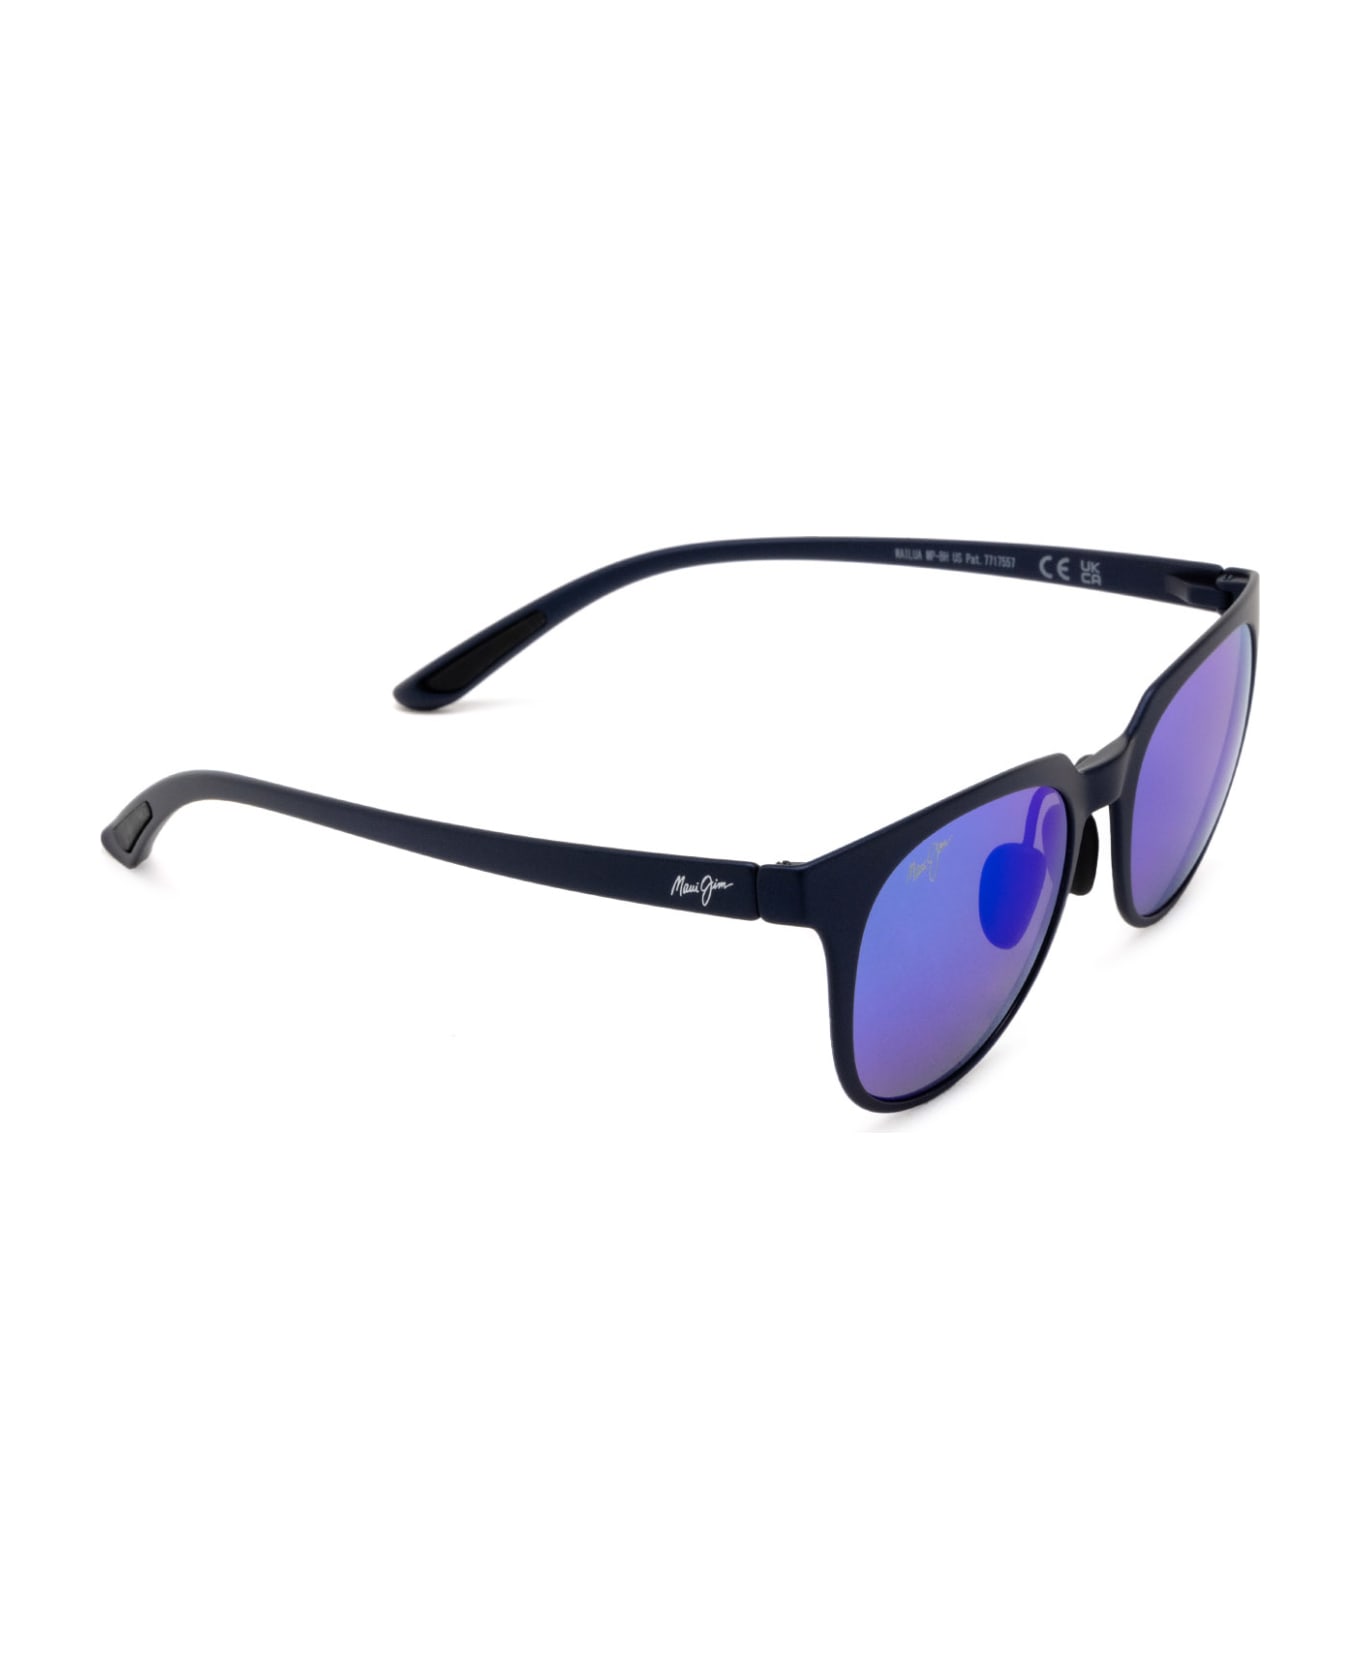 Maui Jim Mj454 Blue Sunglasses - Blue サングラス